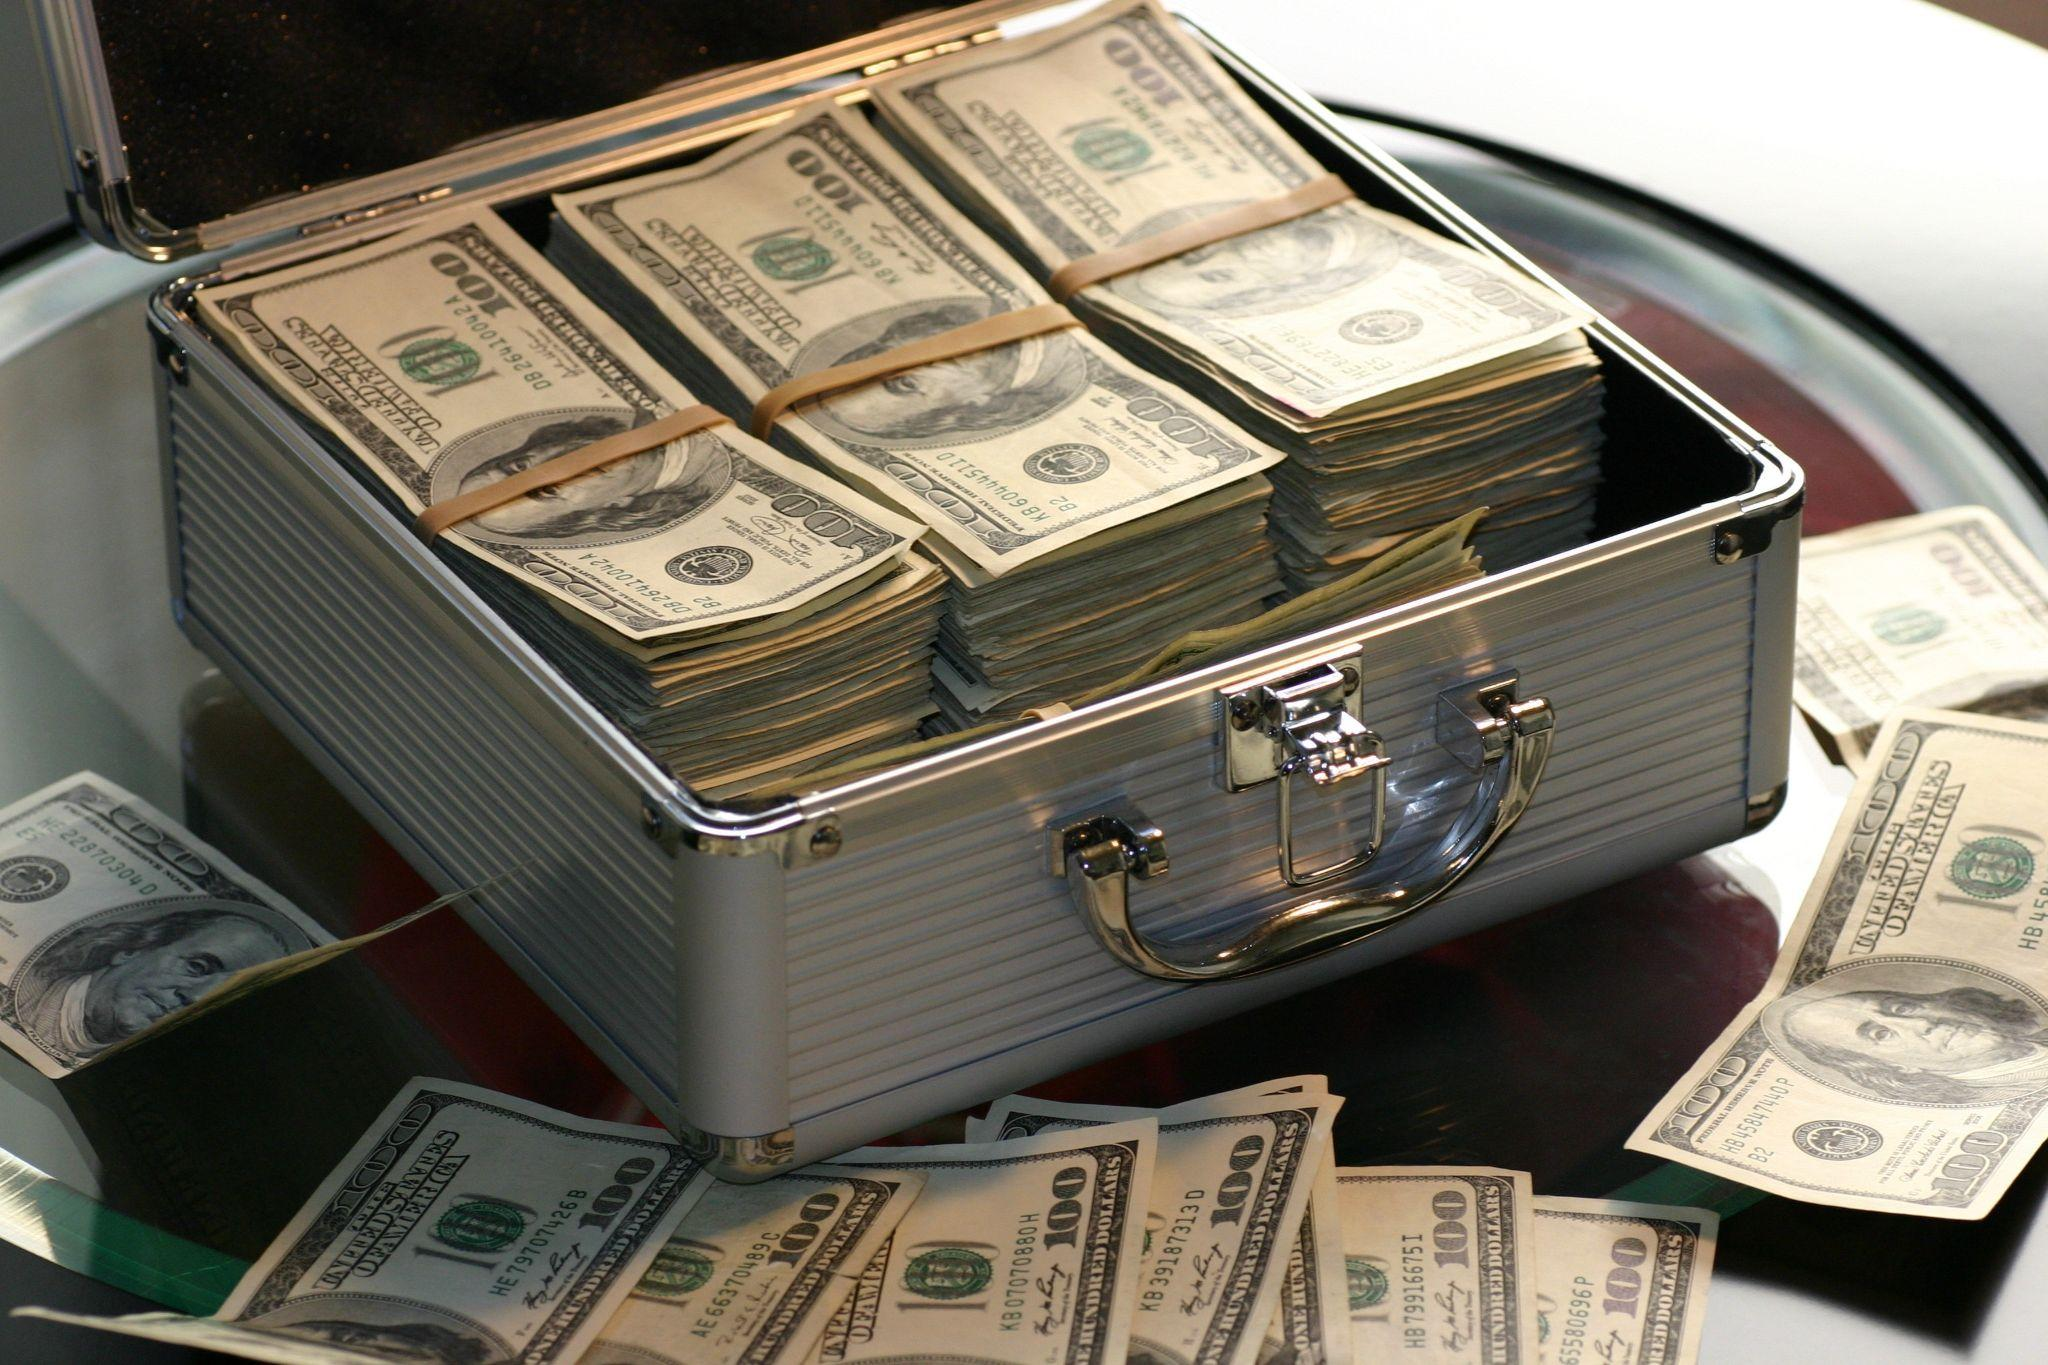 Suitcase full of money during money lending transaction